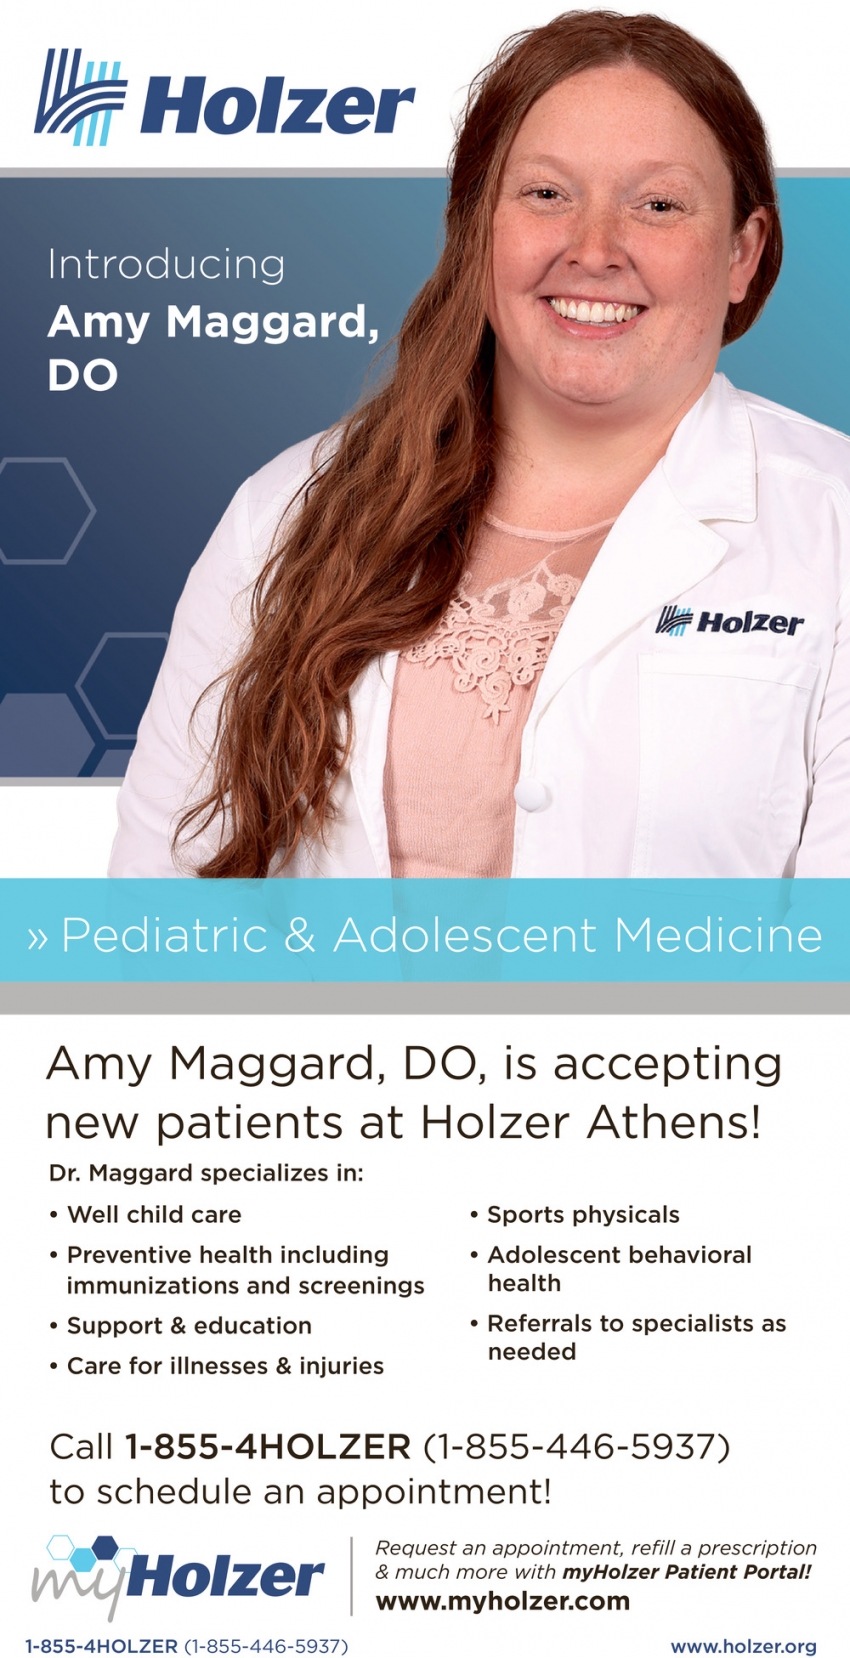 Introducing Amy Maggard, DO